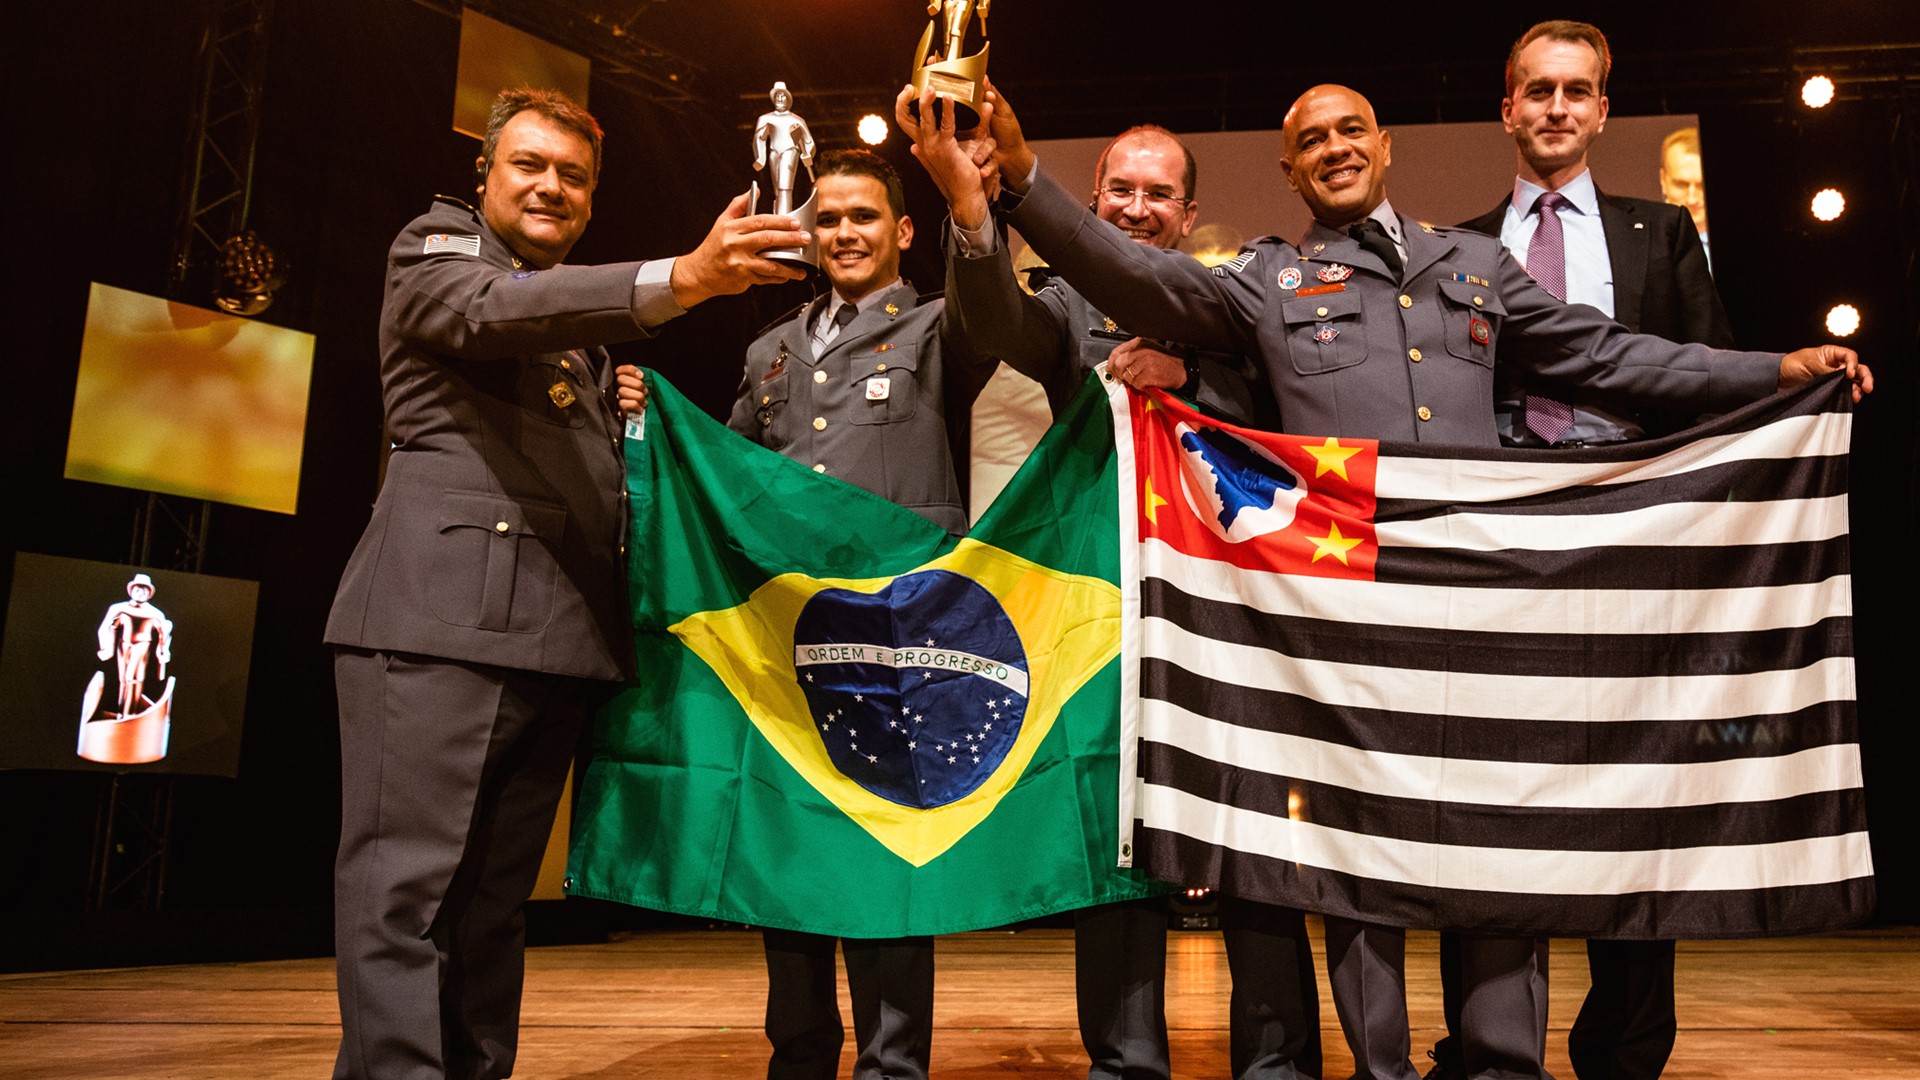 Conrad Dietrich Magirus Award - International Firefighting Team of the Year 2018, the São Paulo Fire Department